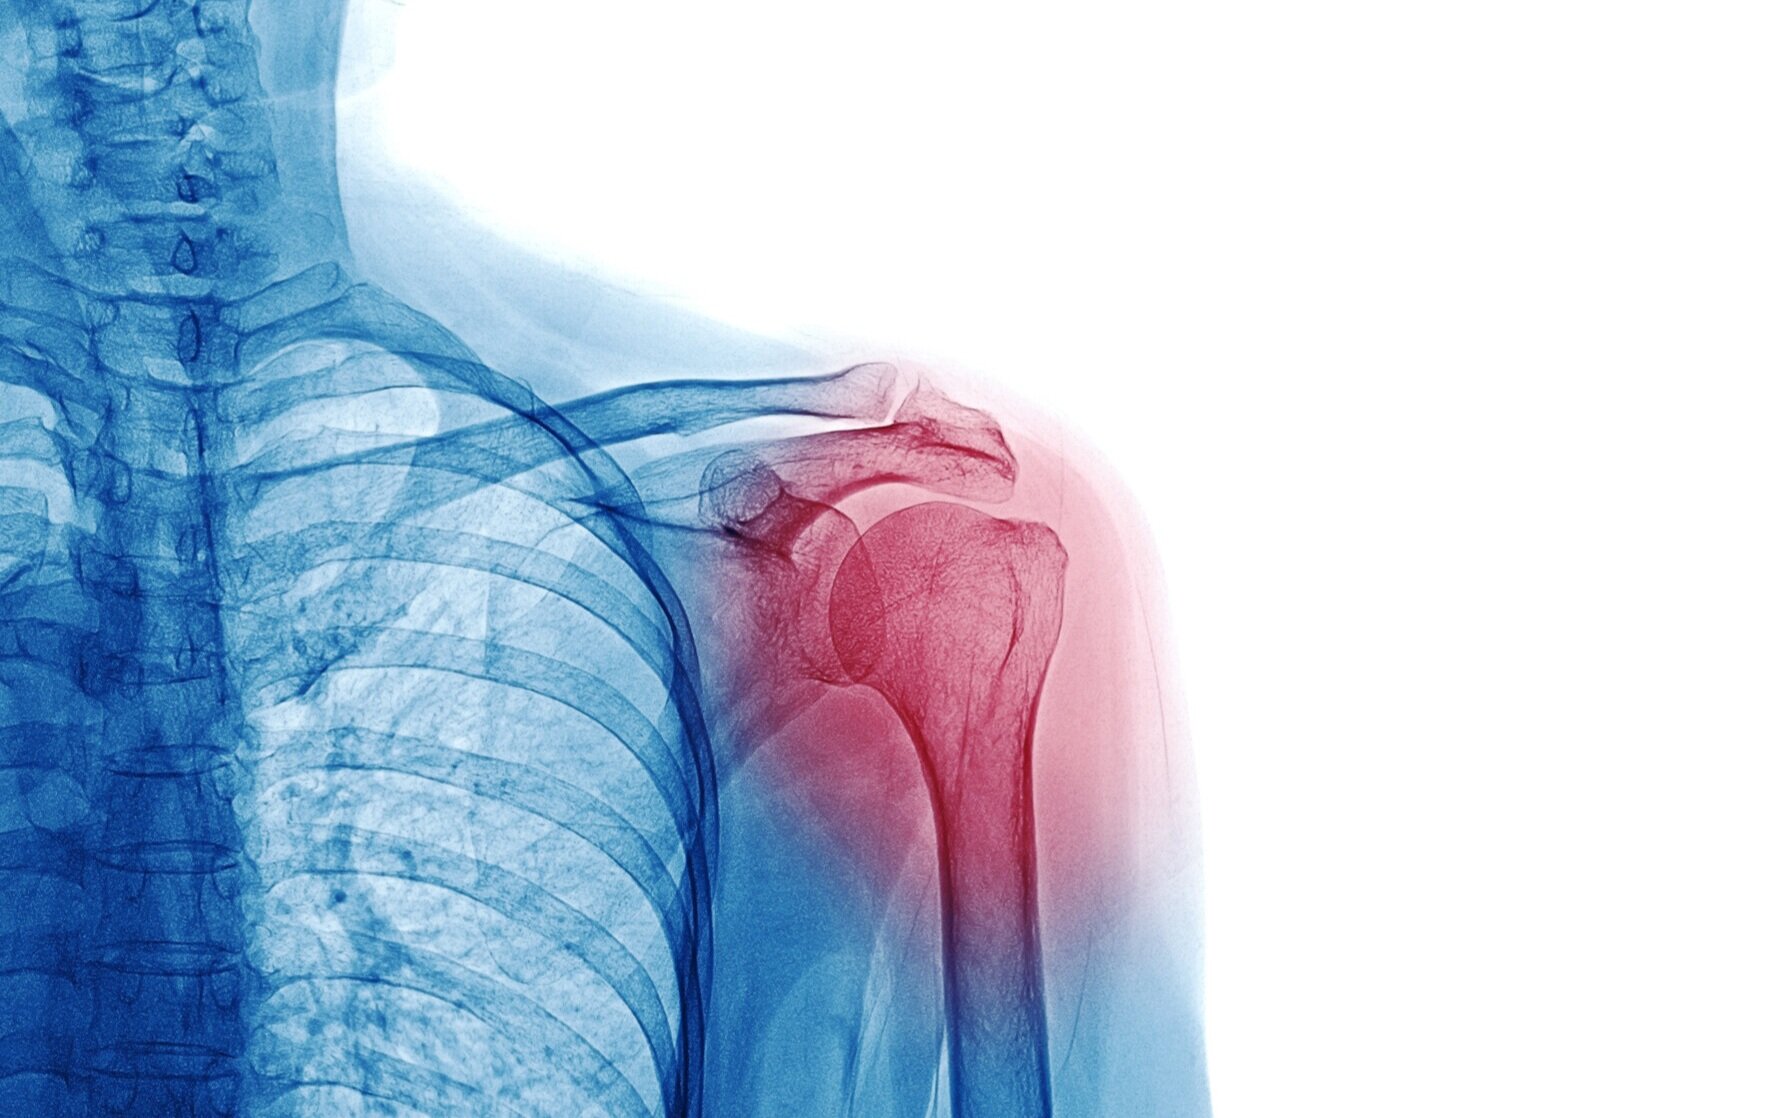 Shoulder injury related to vaccine Administration. Gunshot injury patterns.